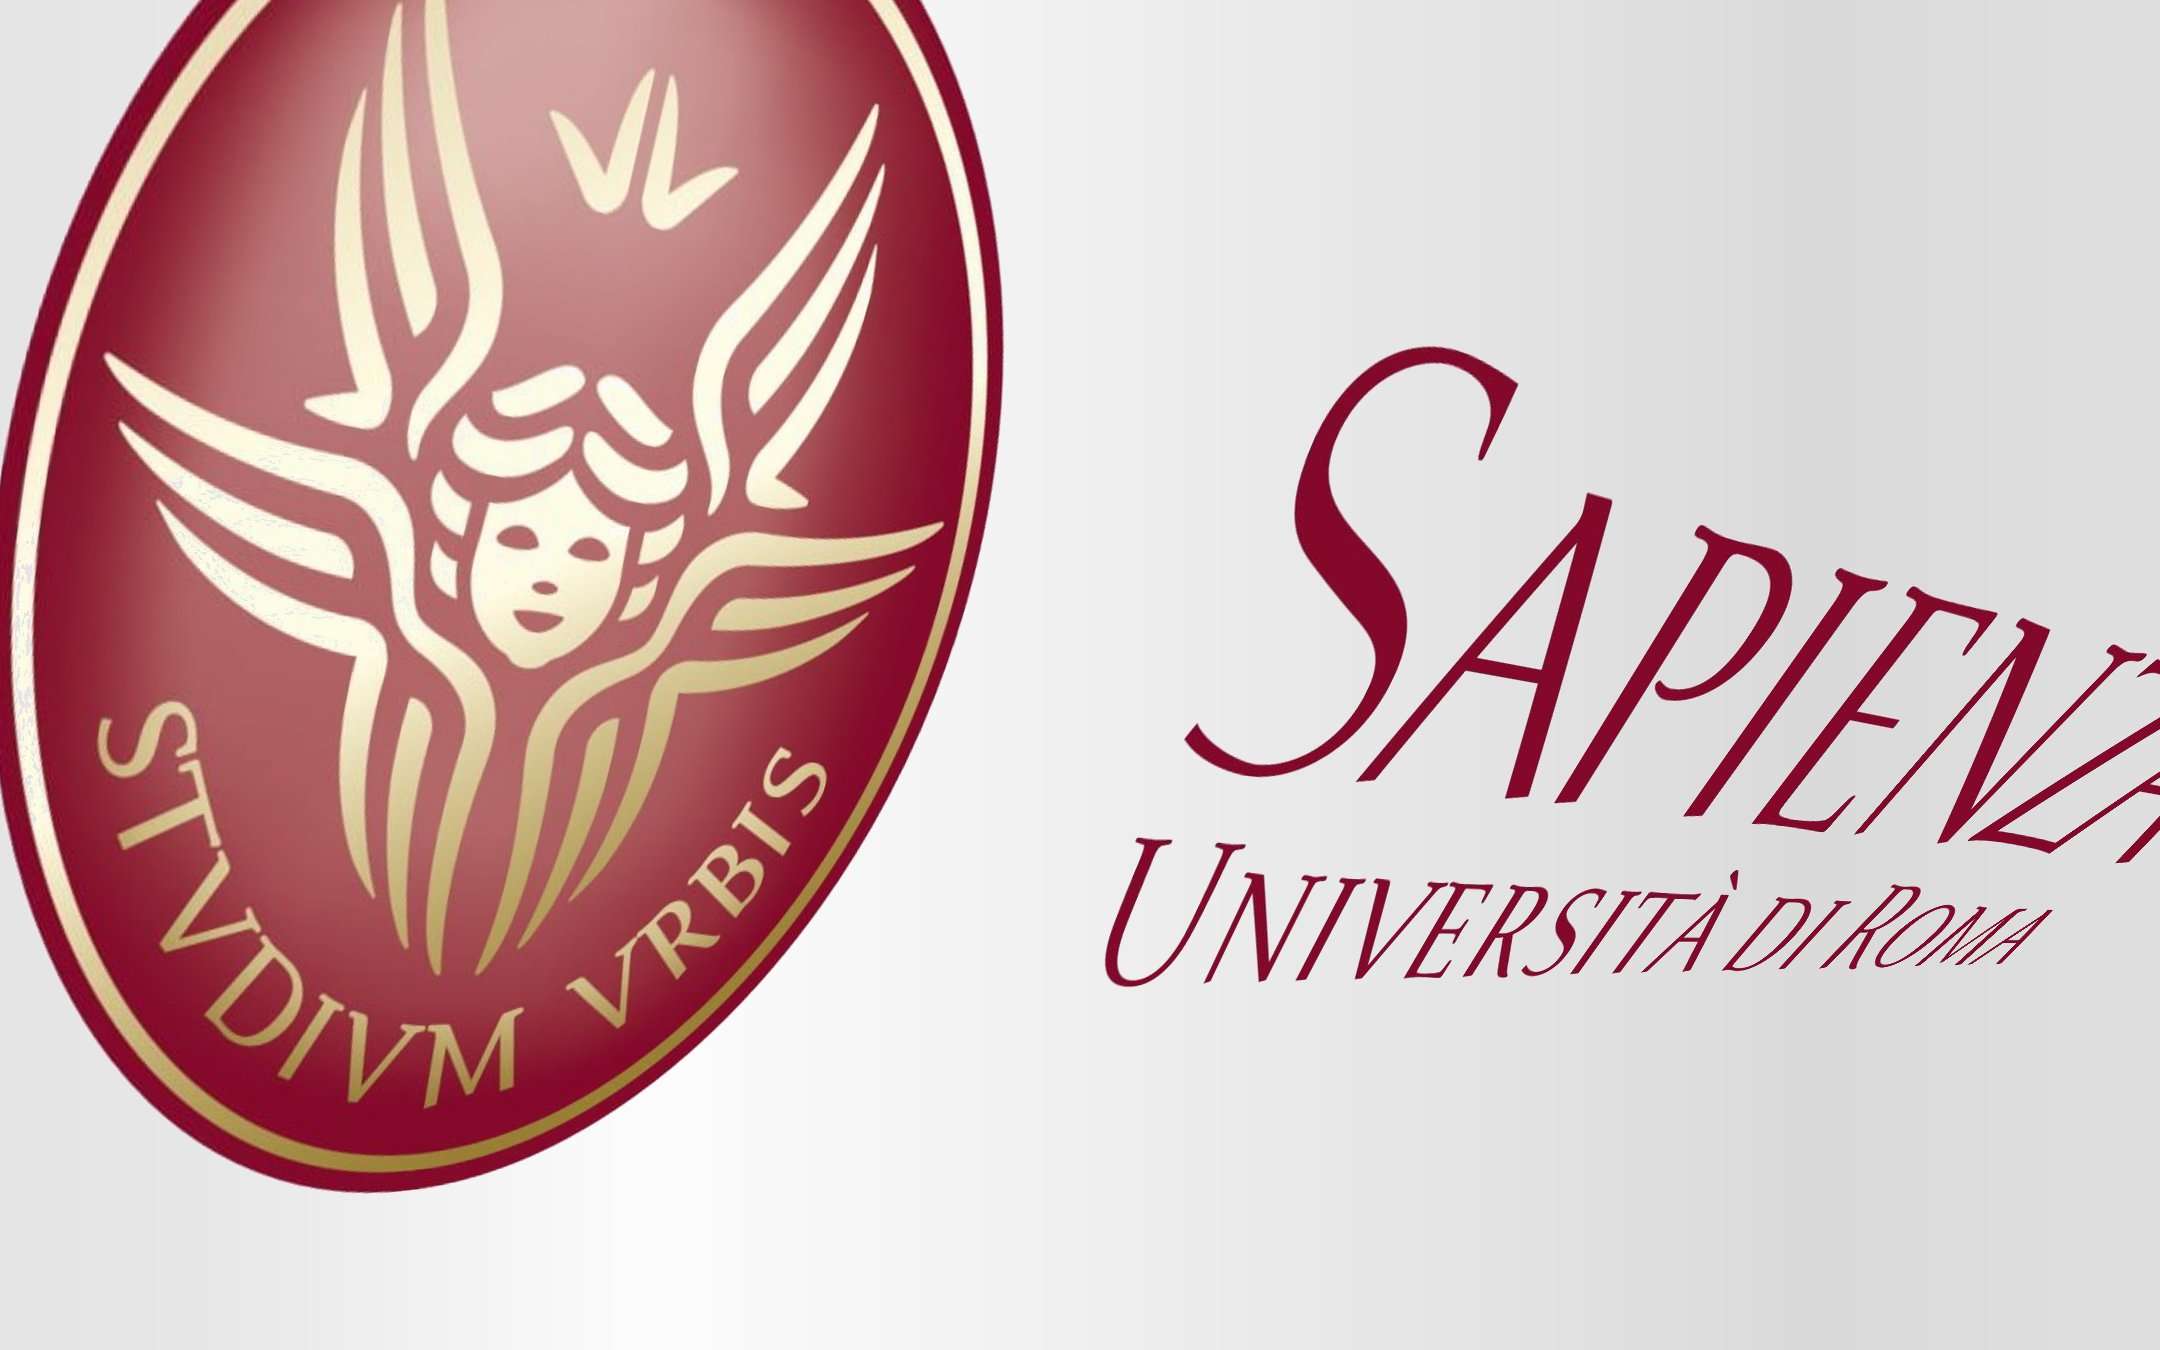 La Sapienza University still stopped: work in progress